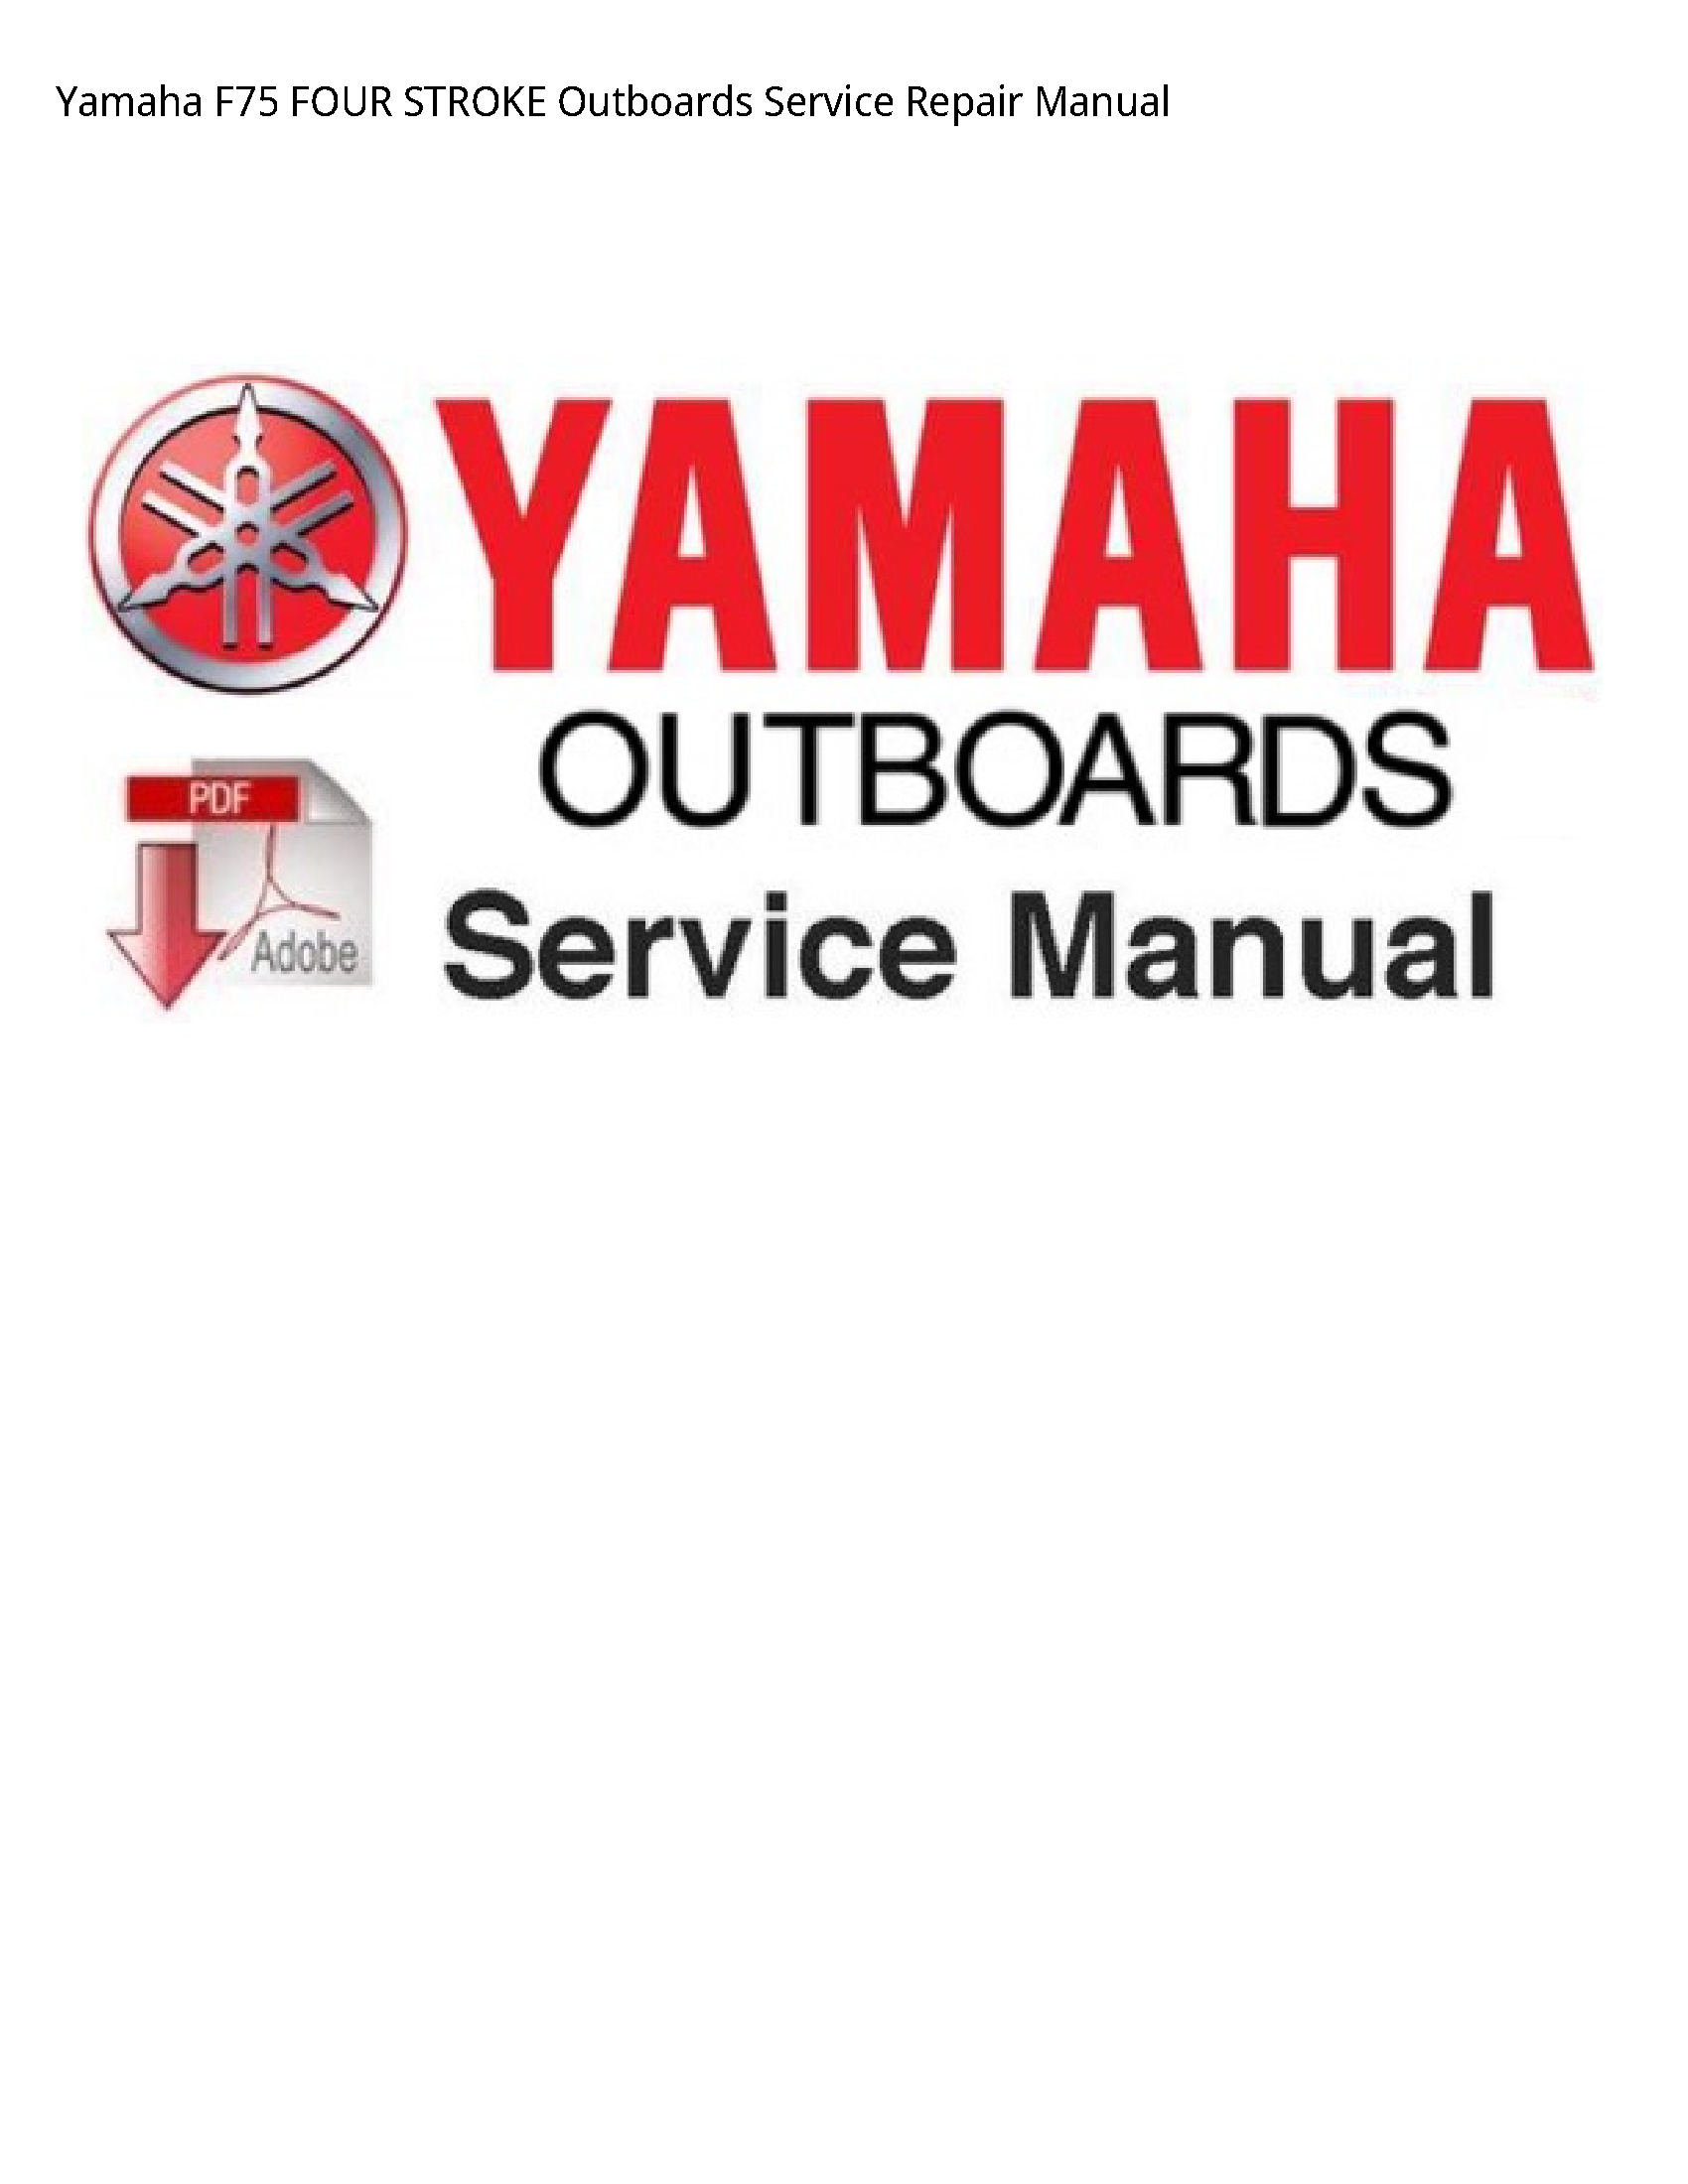 Yamaha F75 FOUR STROKE Outboards manual